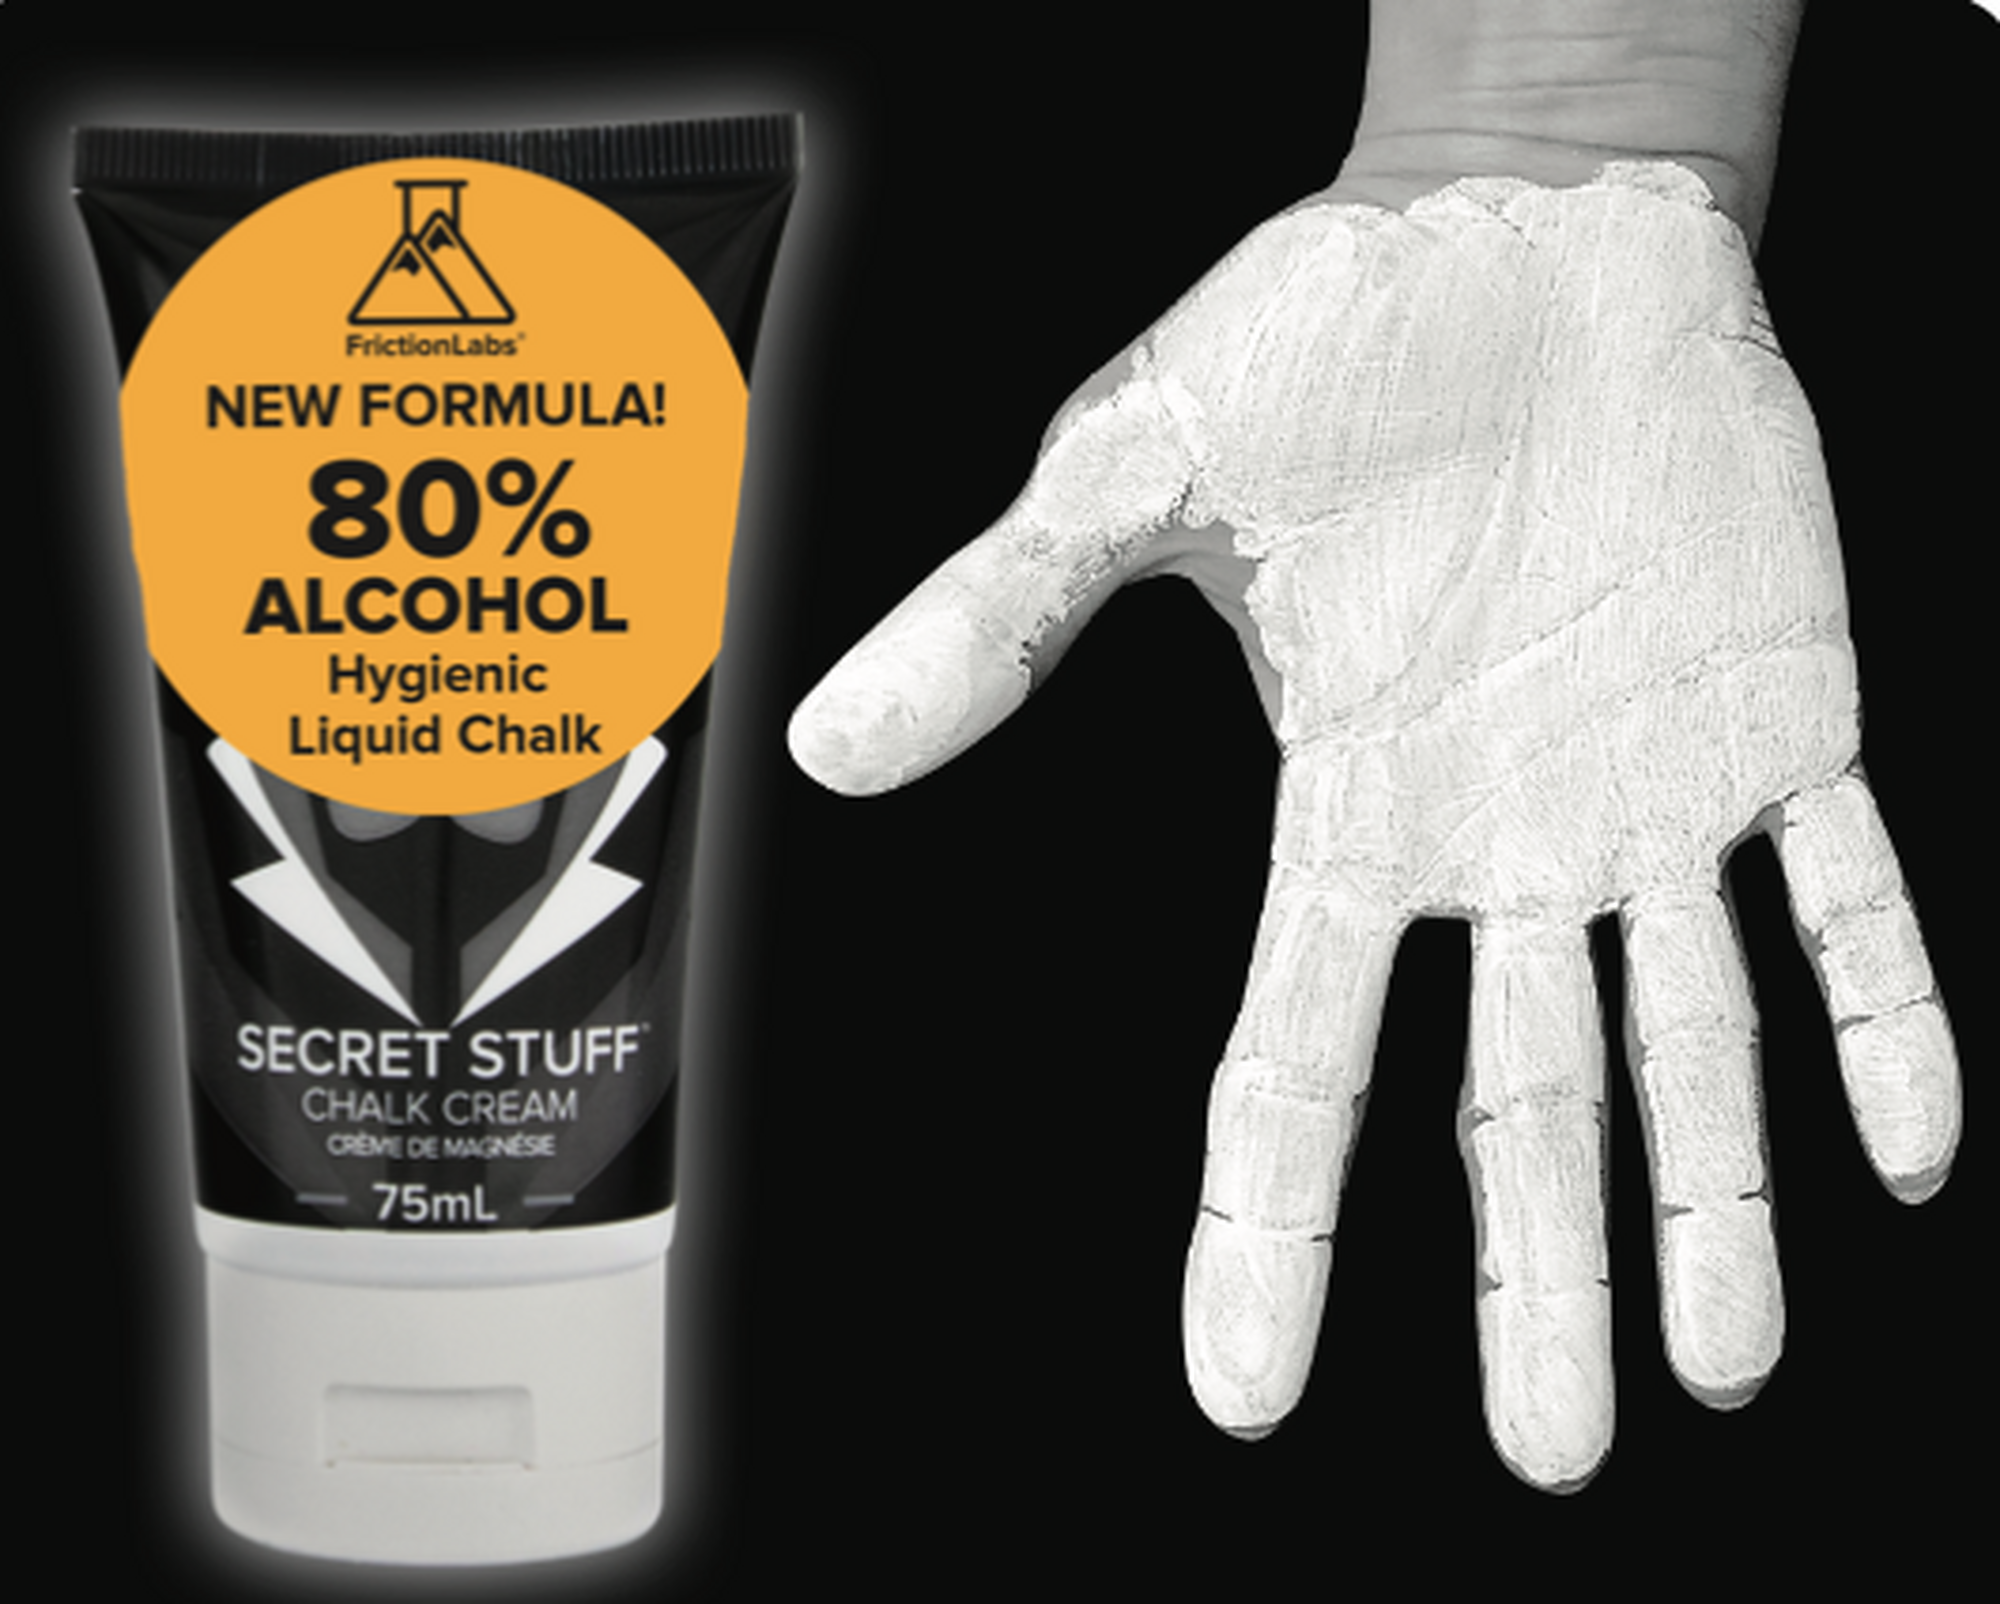 FrictionLabs Secret Stuff Hygienic Liquid Chalk